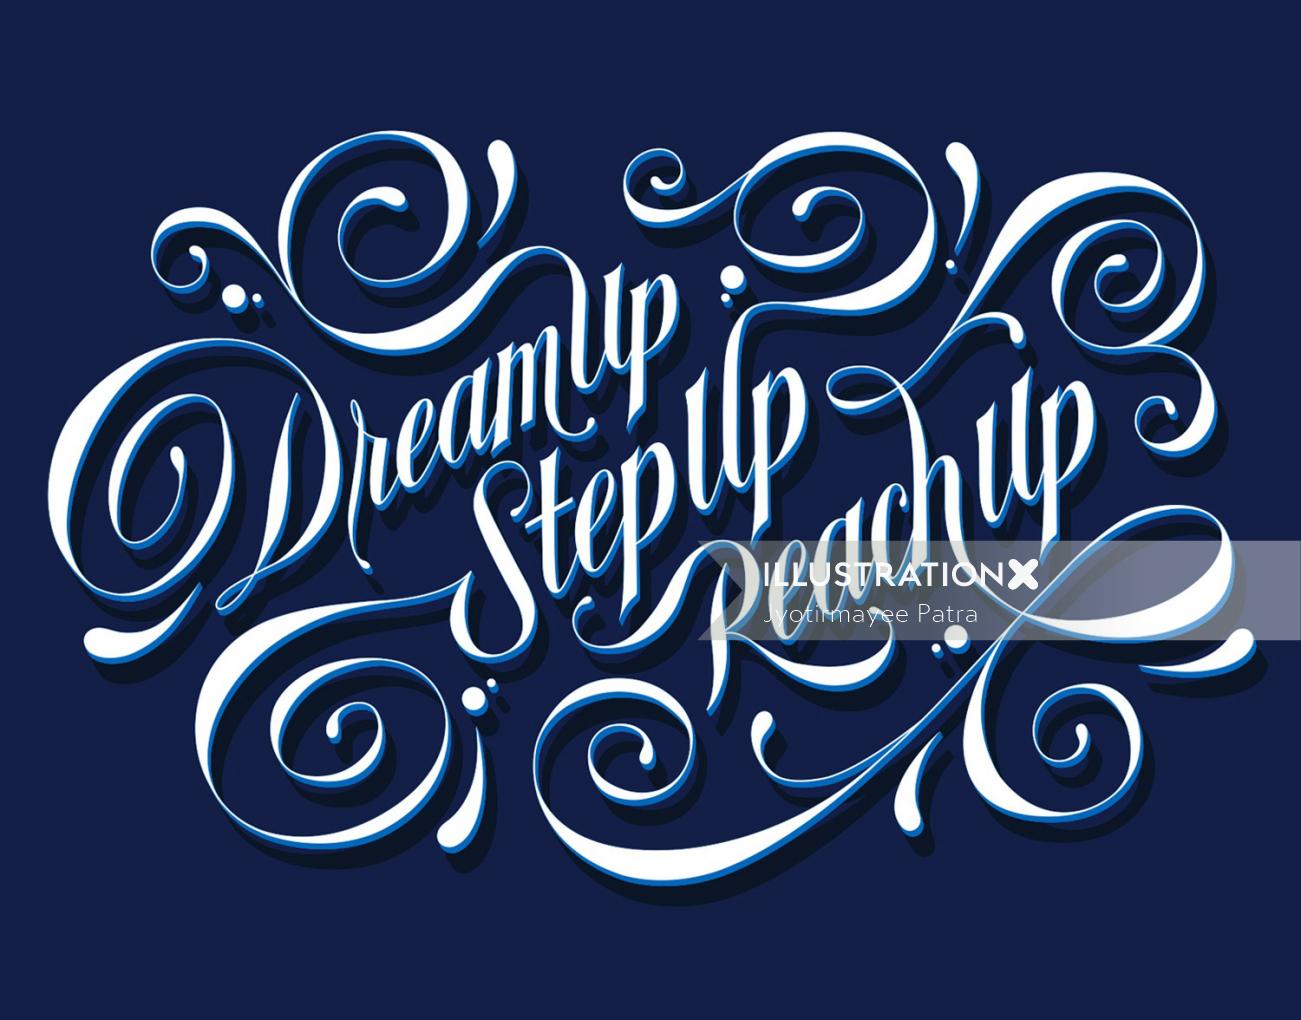 Mural personalizado letras dreamup, stepup, reachup